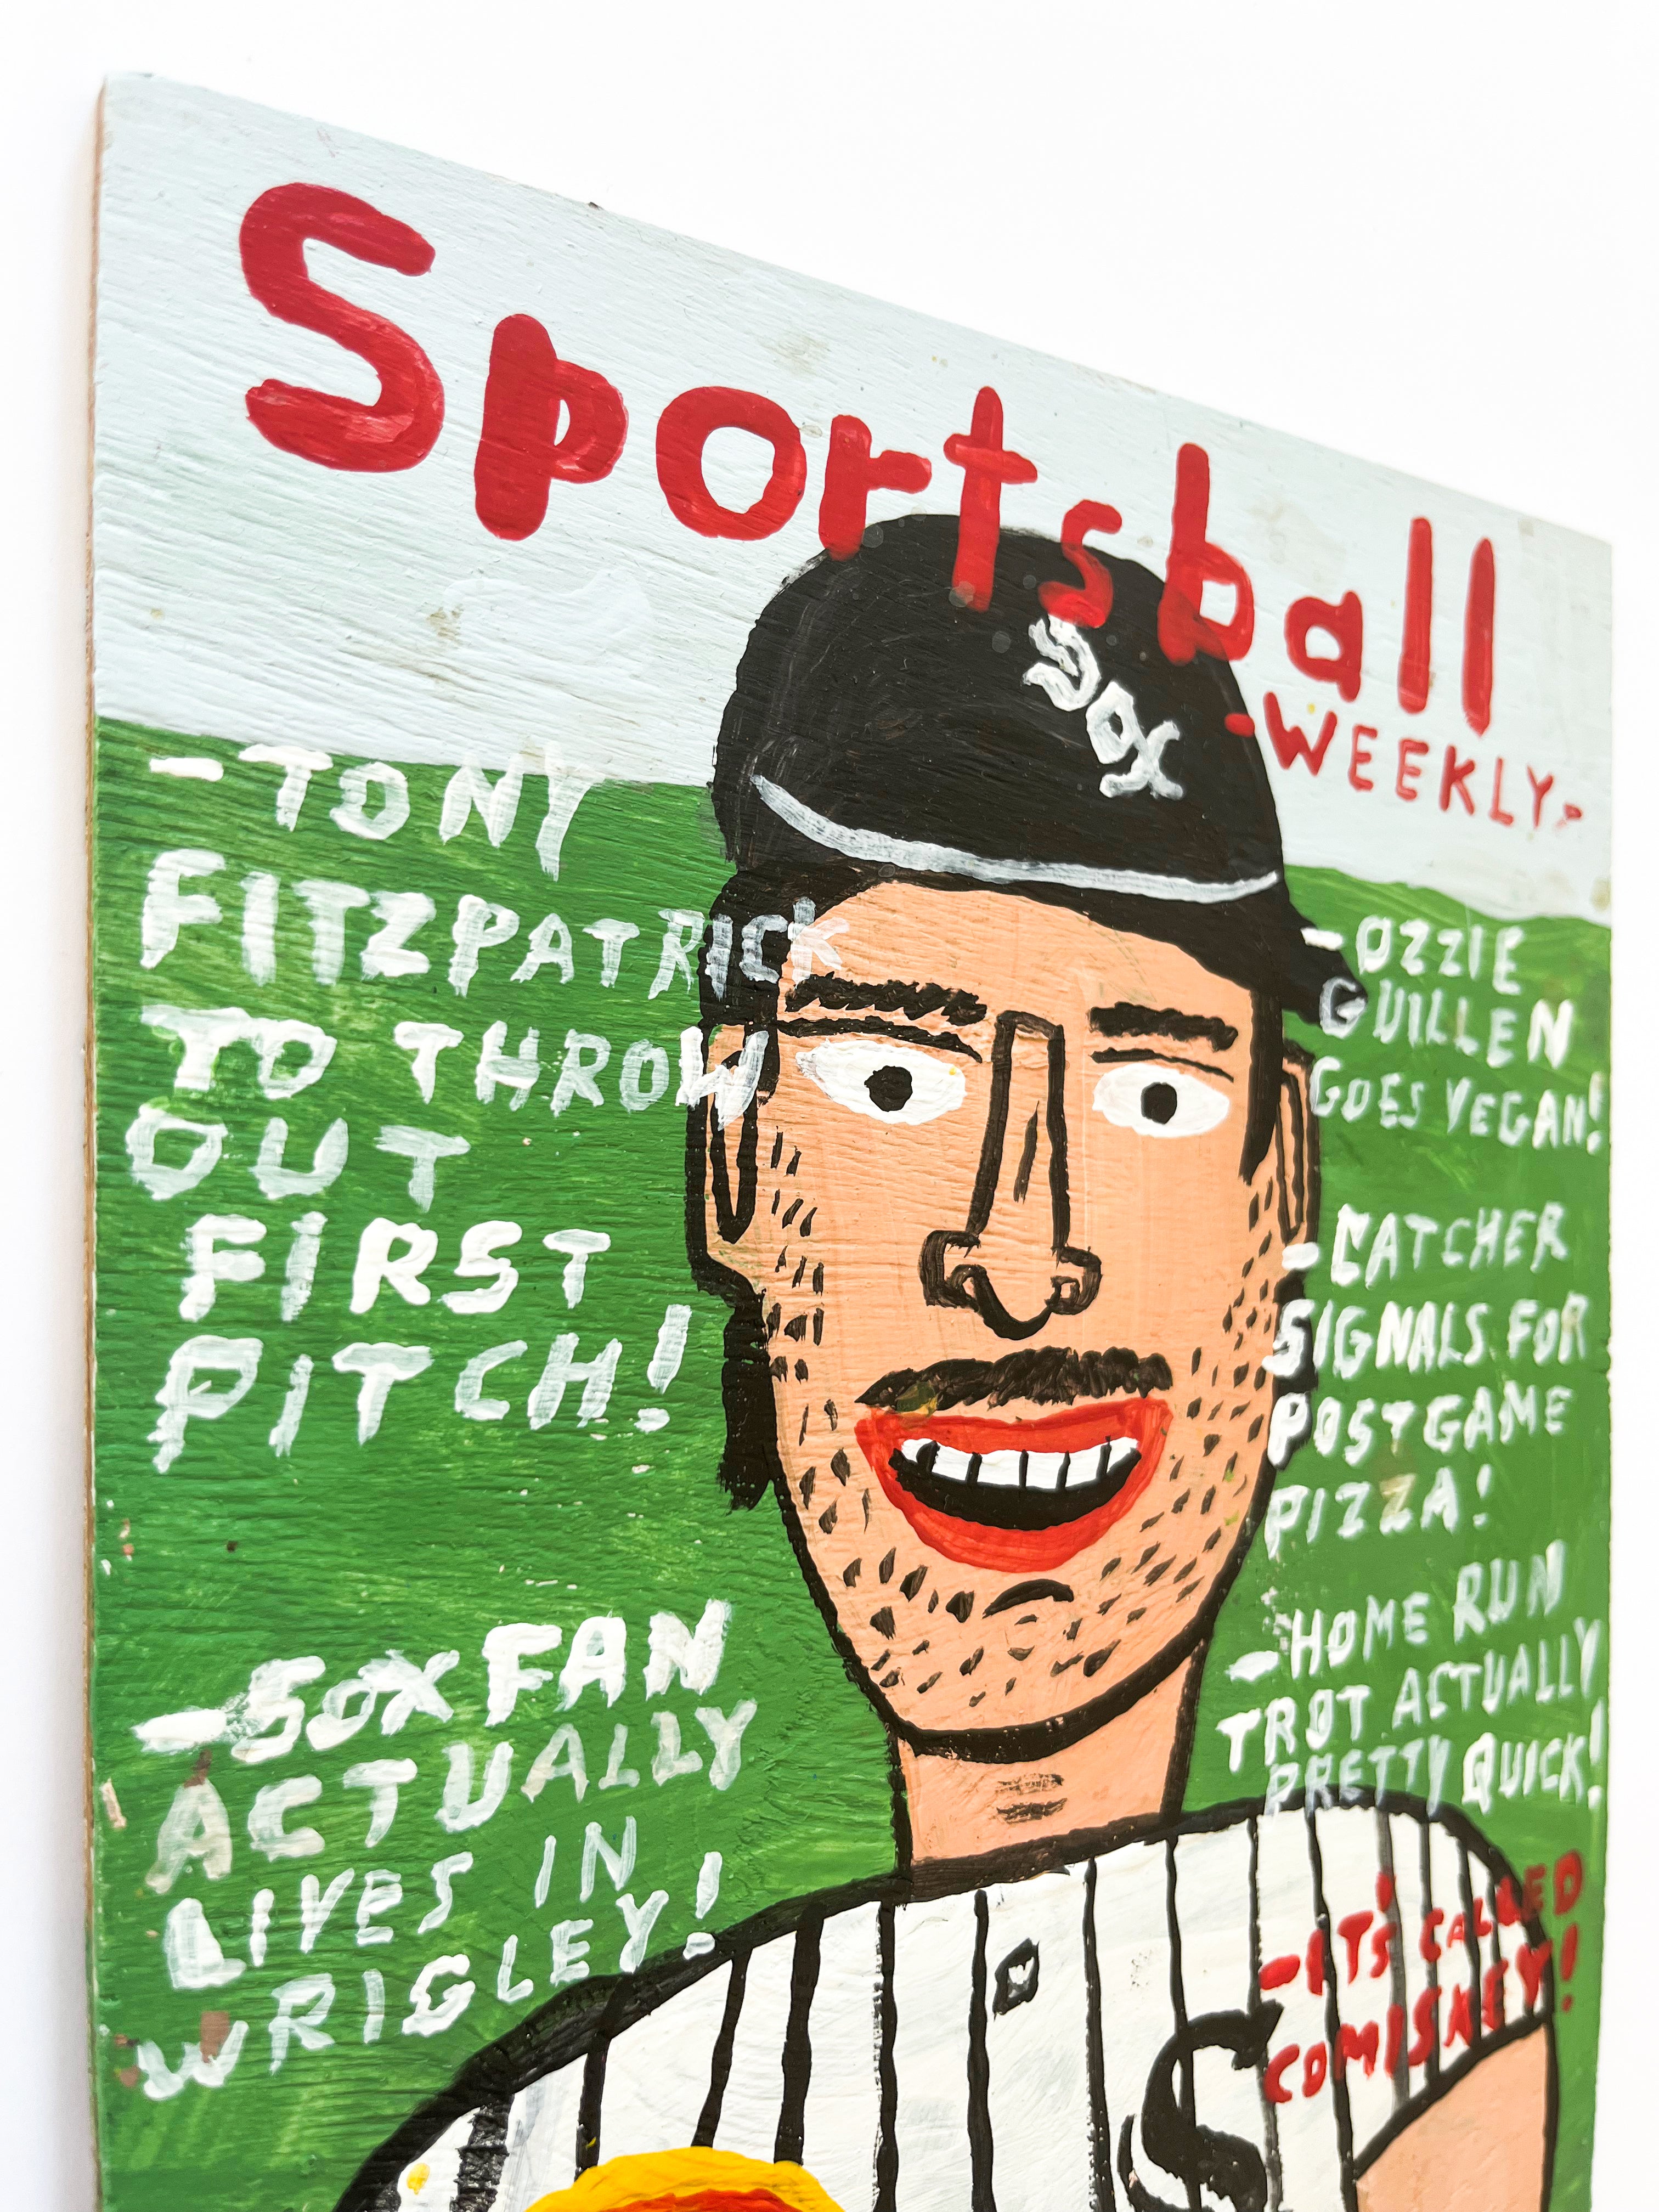 "Sportsball: White Sox" by Dont Fret